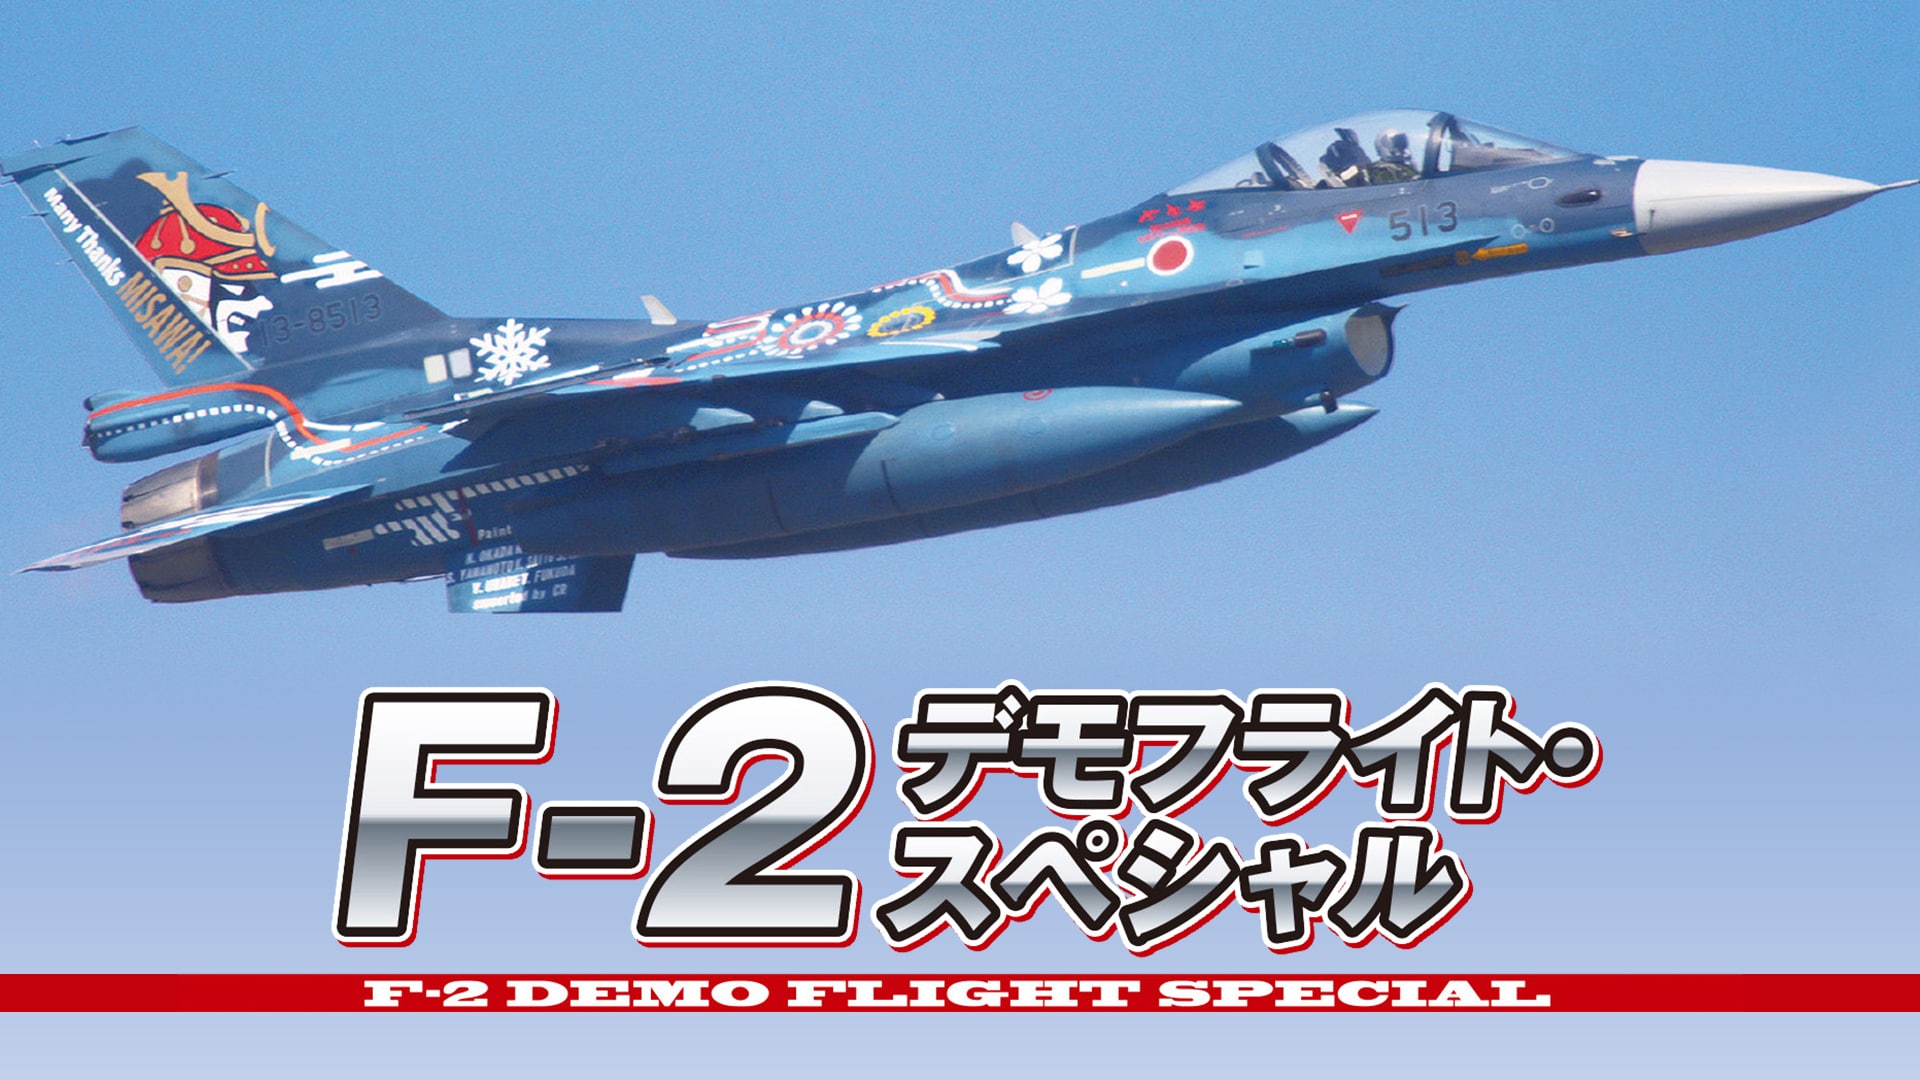 JASDF 航空自衛隊 異機種飛行展示 セレクション｜カンテレドーガ【初回30日間無料トライアル！】